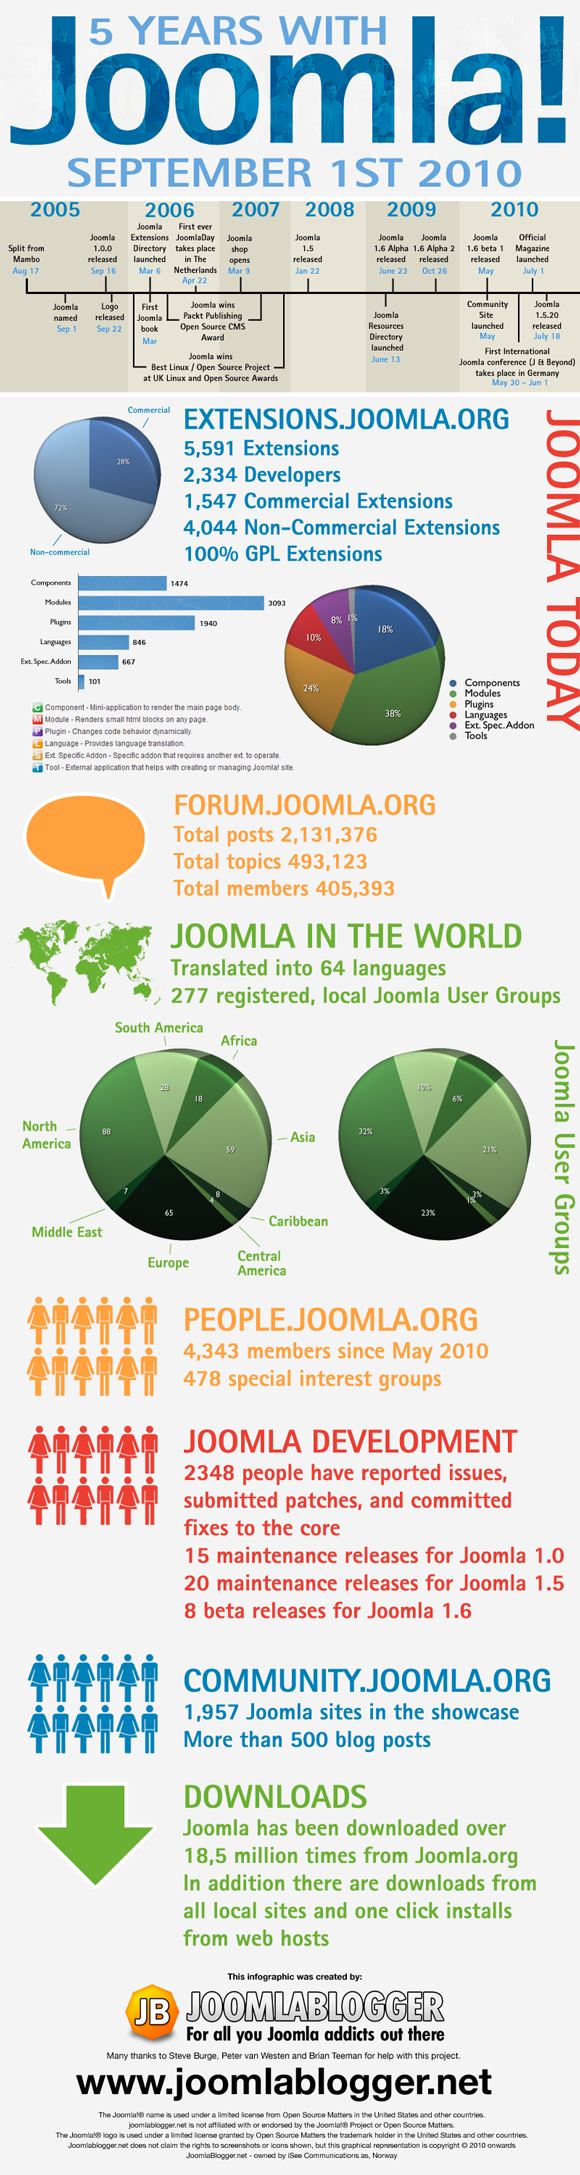 joomla-5-year-anniversary-infographic-580px